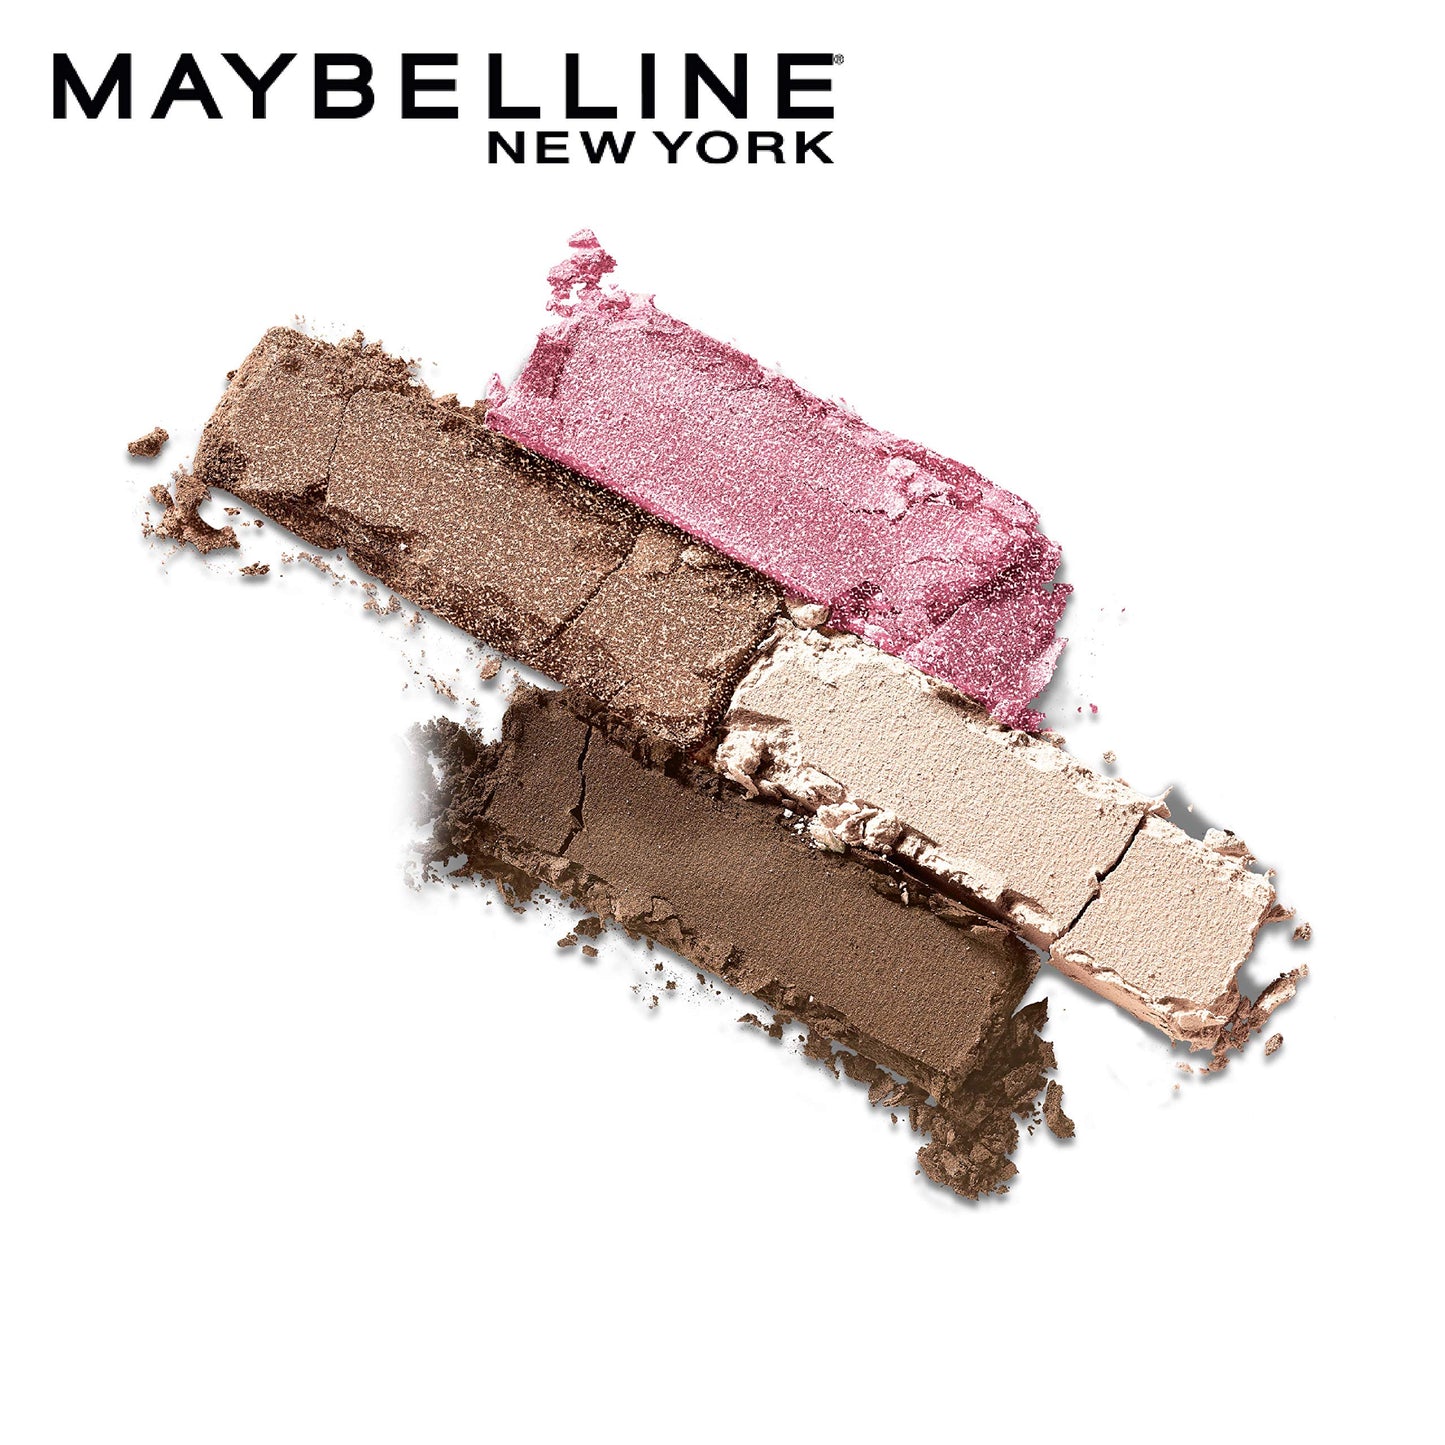 Maybelline New York Eyeshadow Palette, 6 Highly Blendable Shades, Sheer Finish, City Mini Palette, Westside Roses, 6.4g